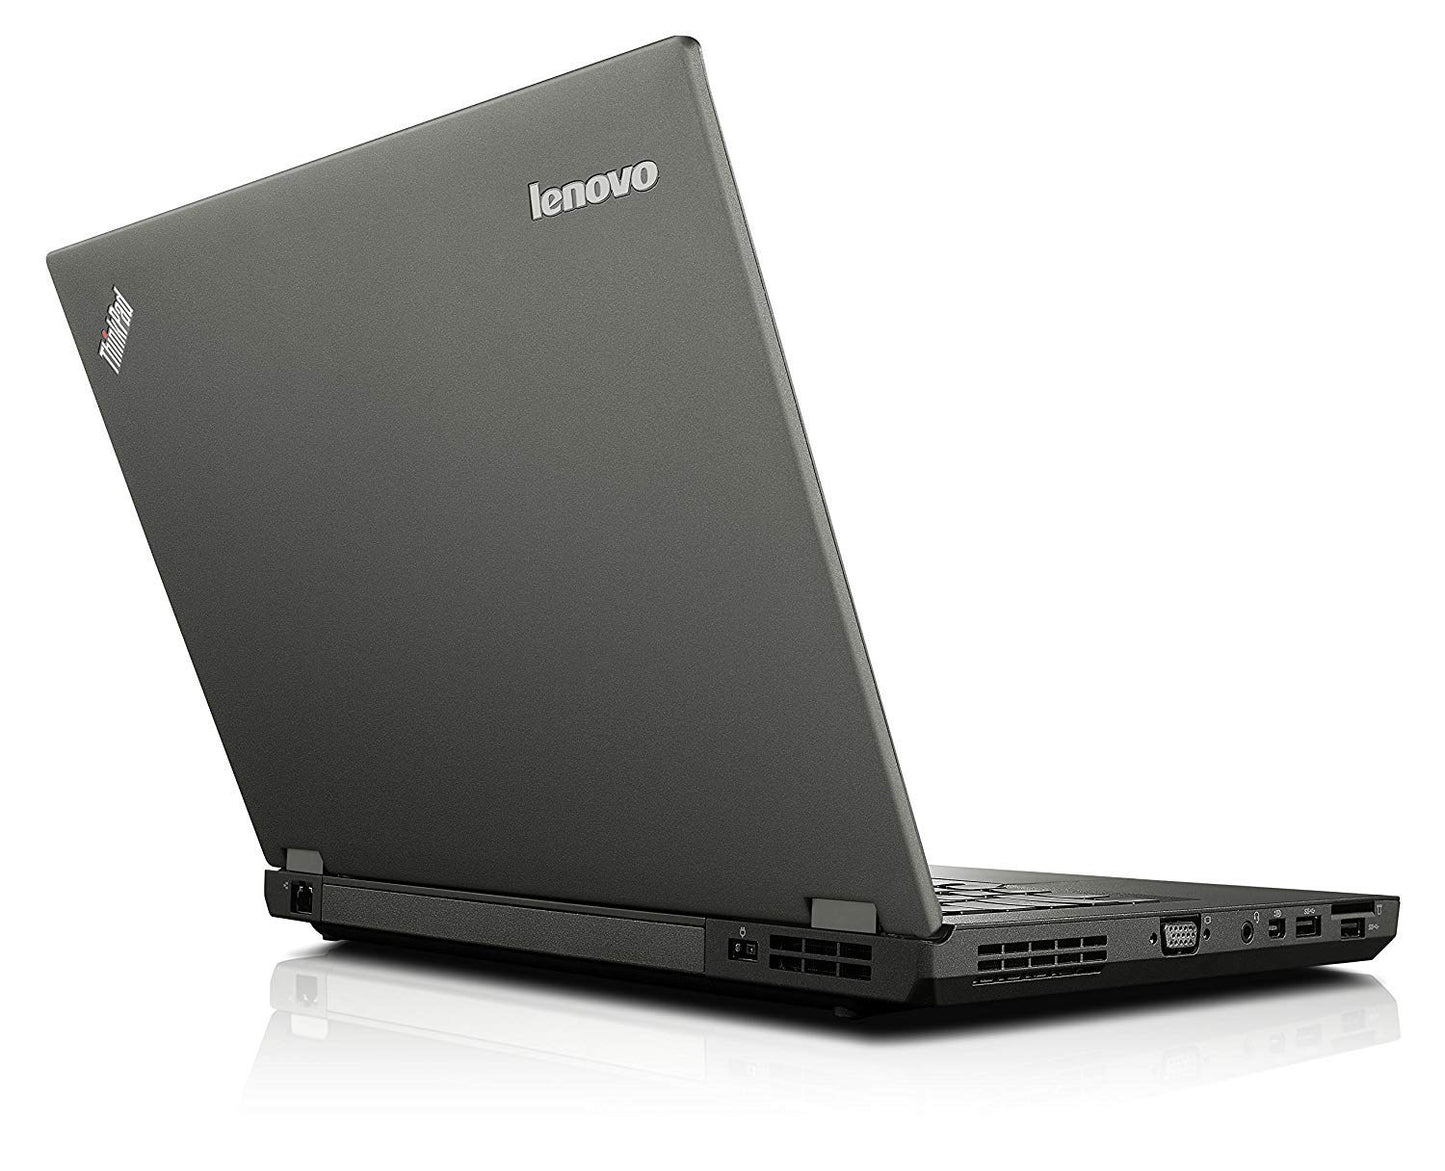 Lenovo T440P - 14 inch - Core i5 4300 - 4GB RAM - 500GB HDD